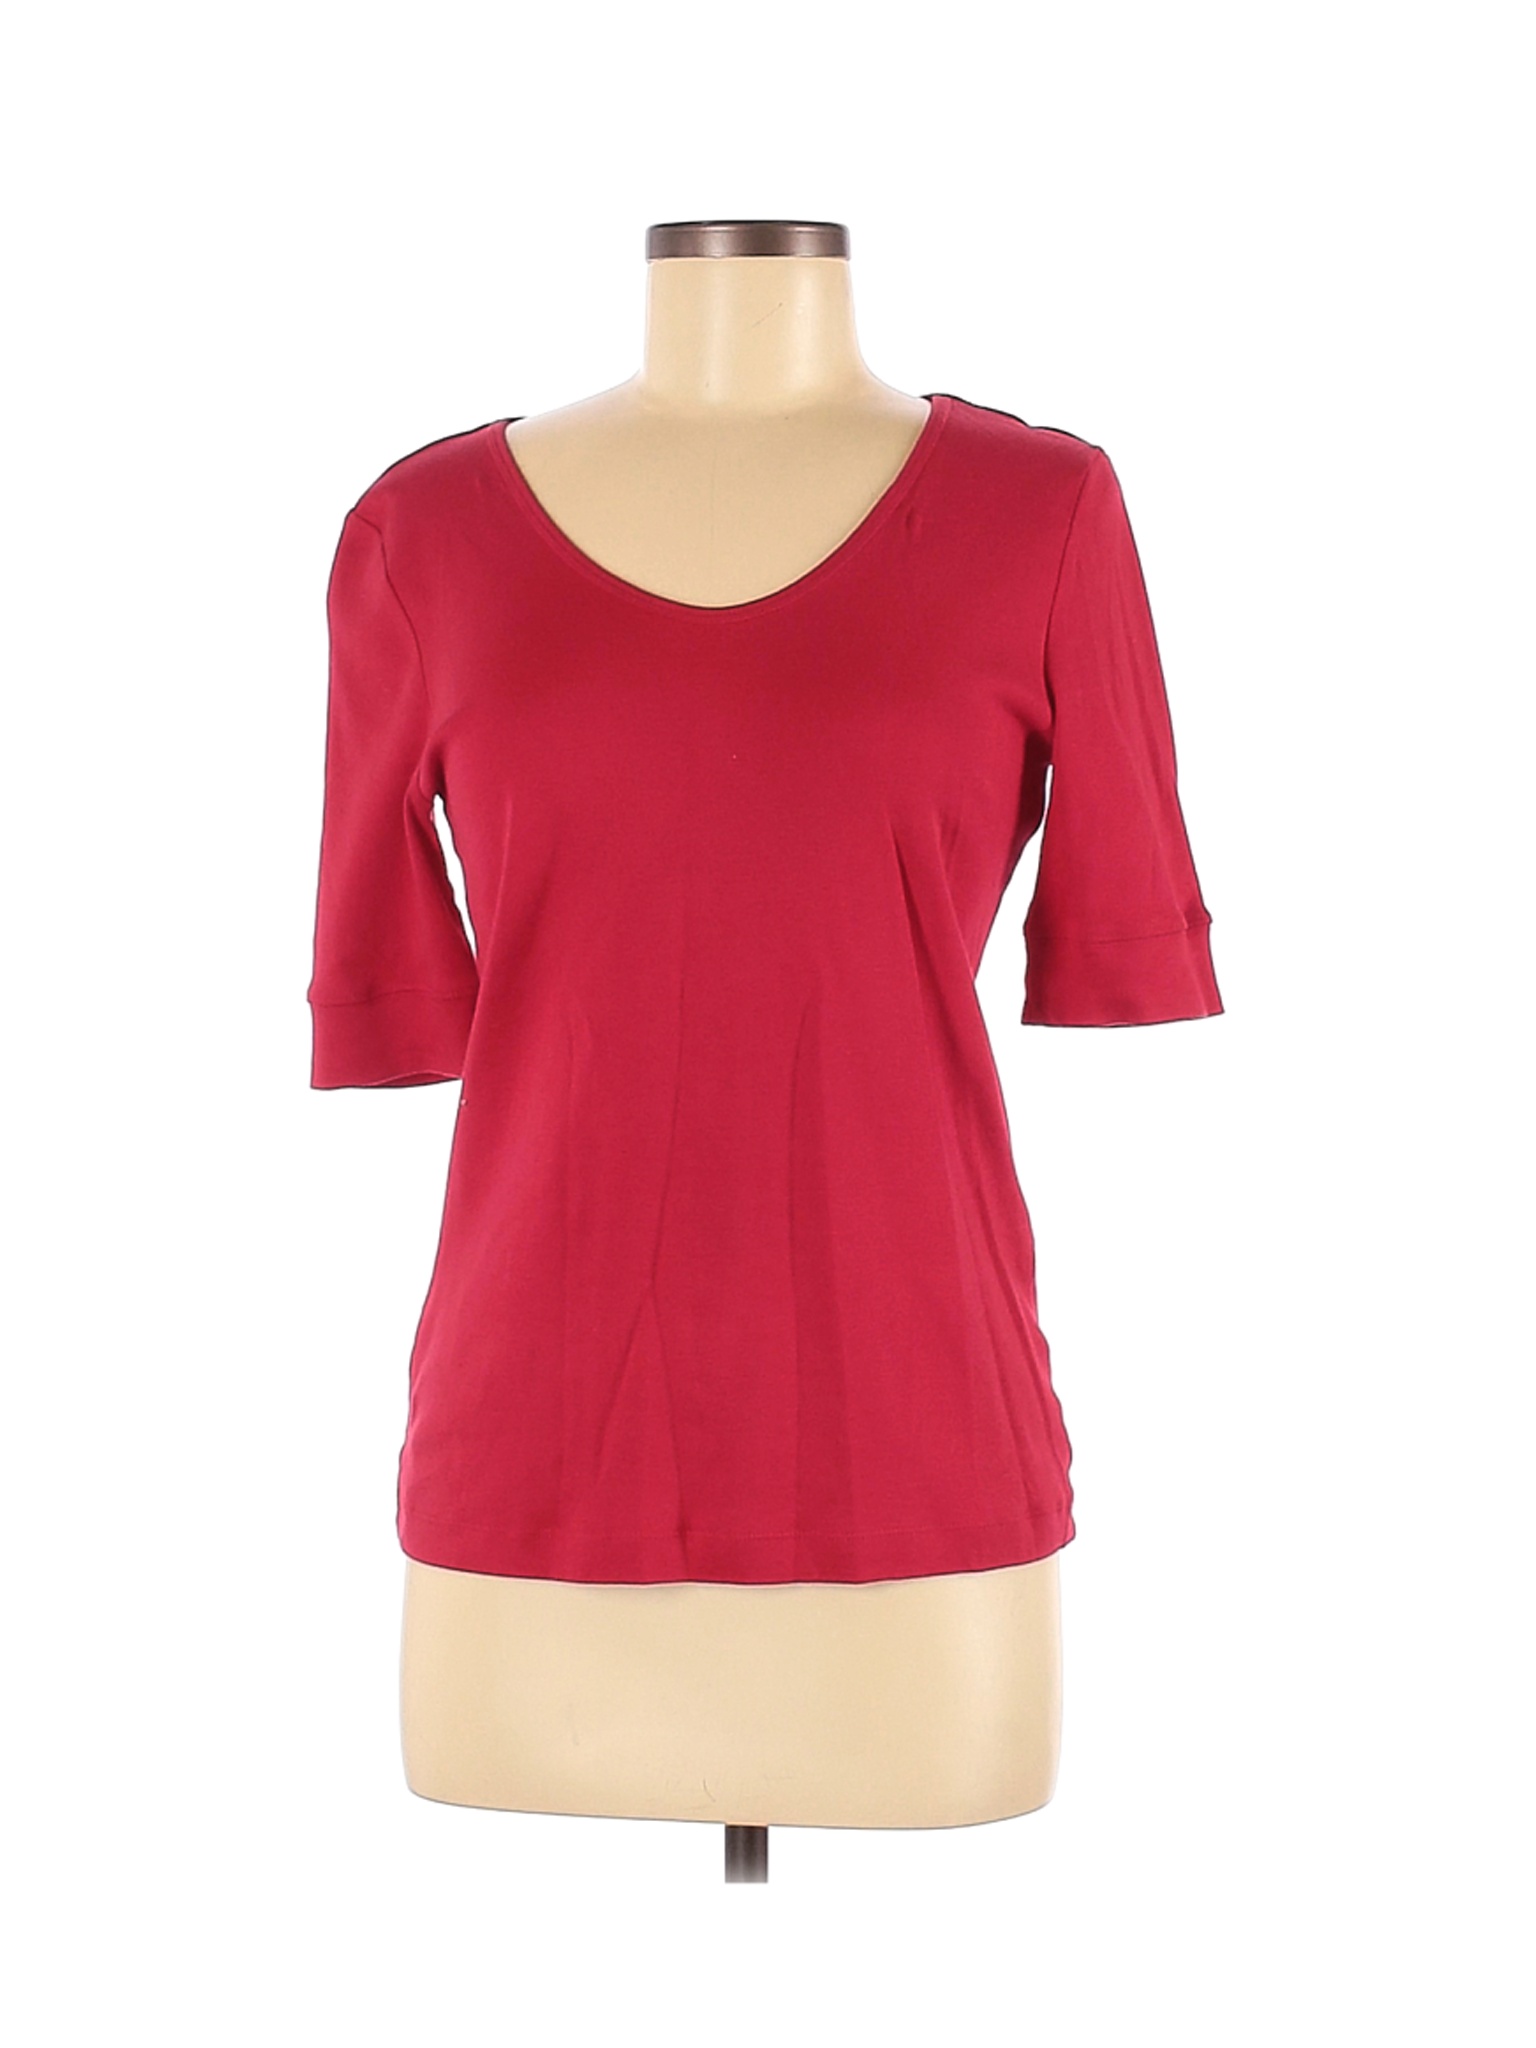 Talbots Women Red 3/4 Sleeve T-Shirt S | eBay